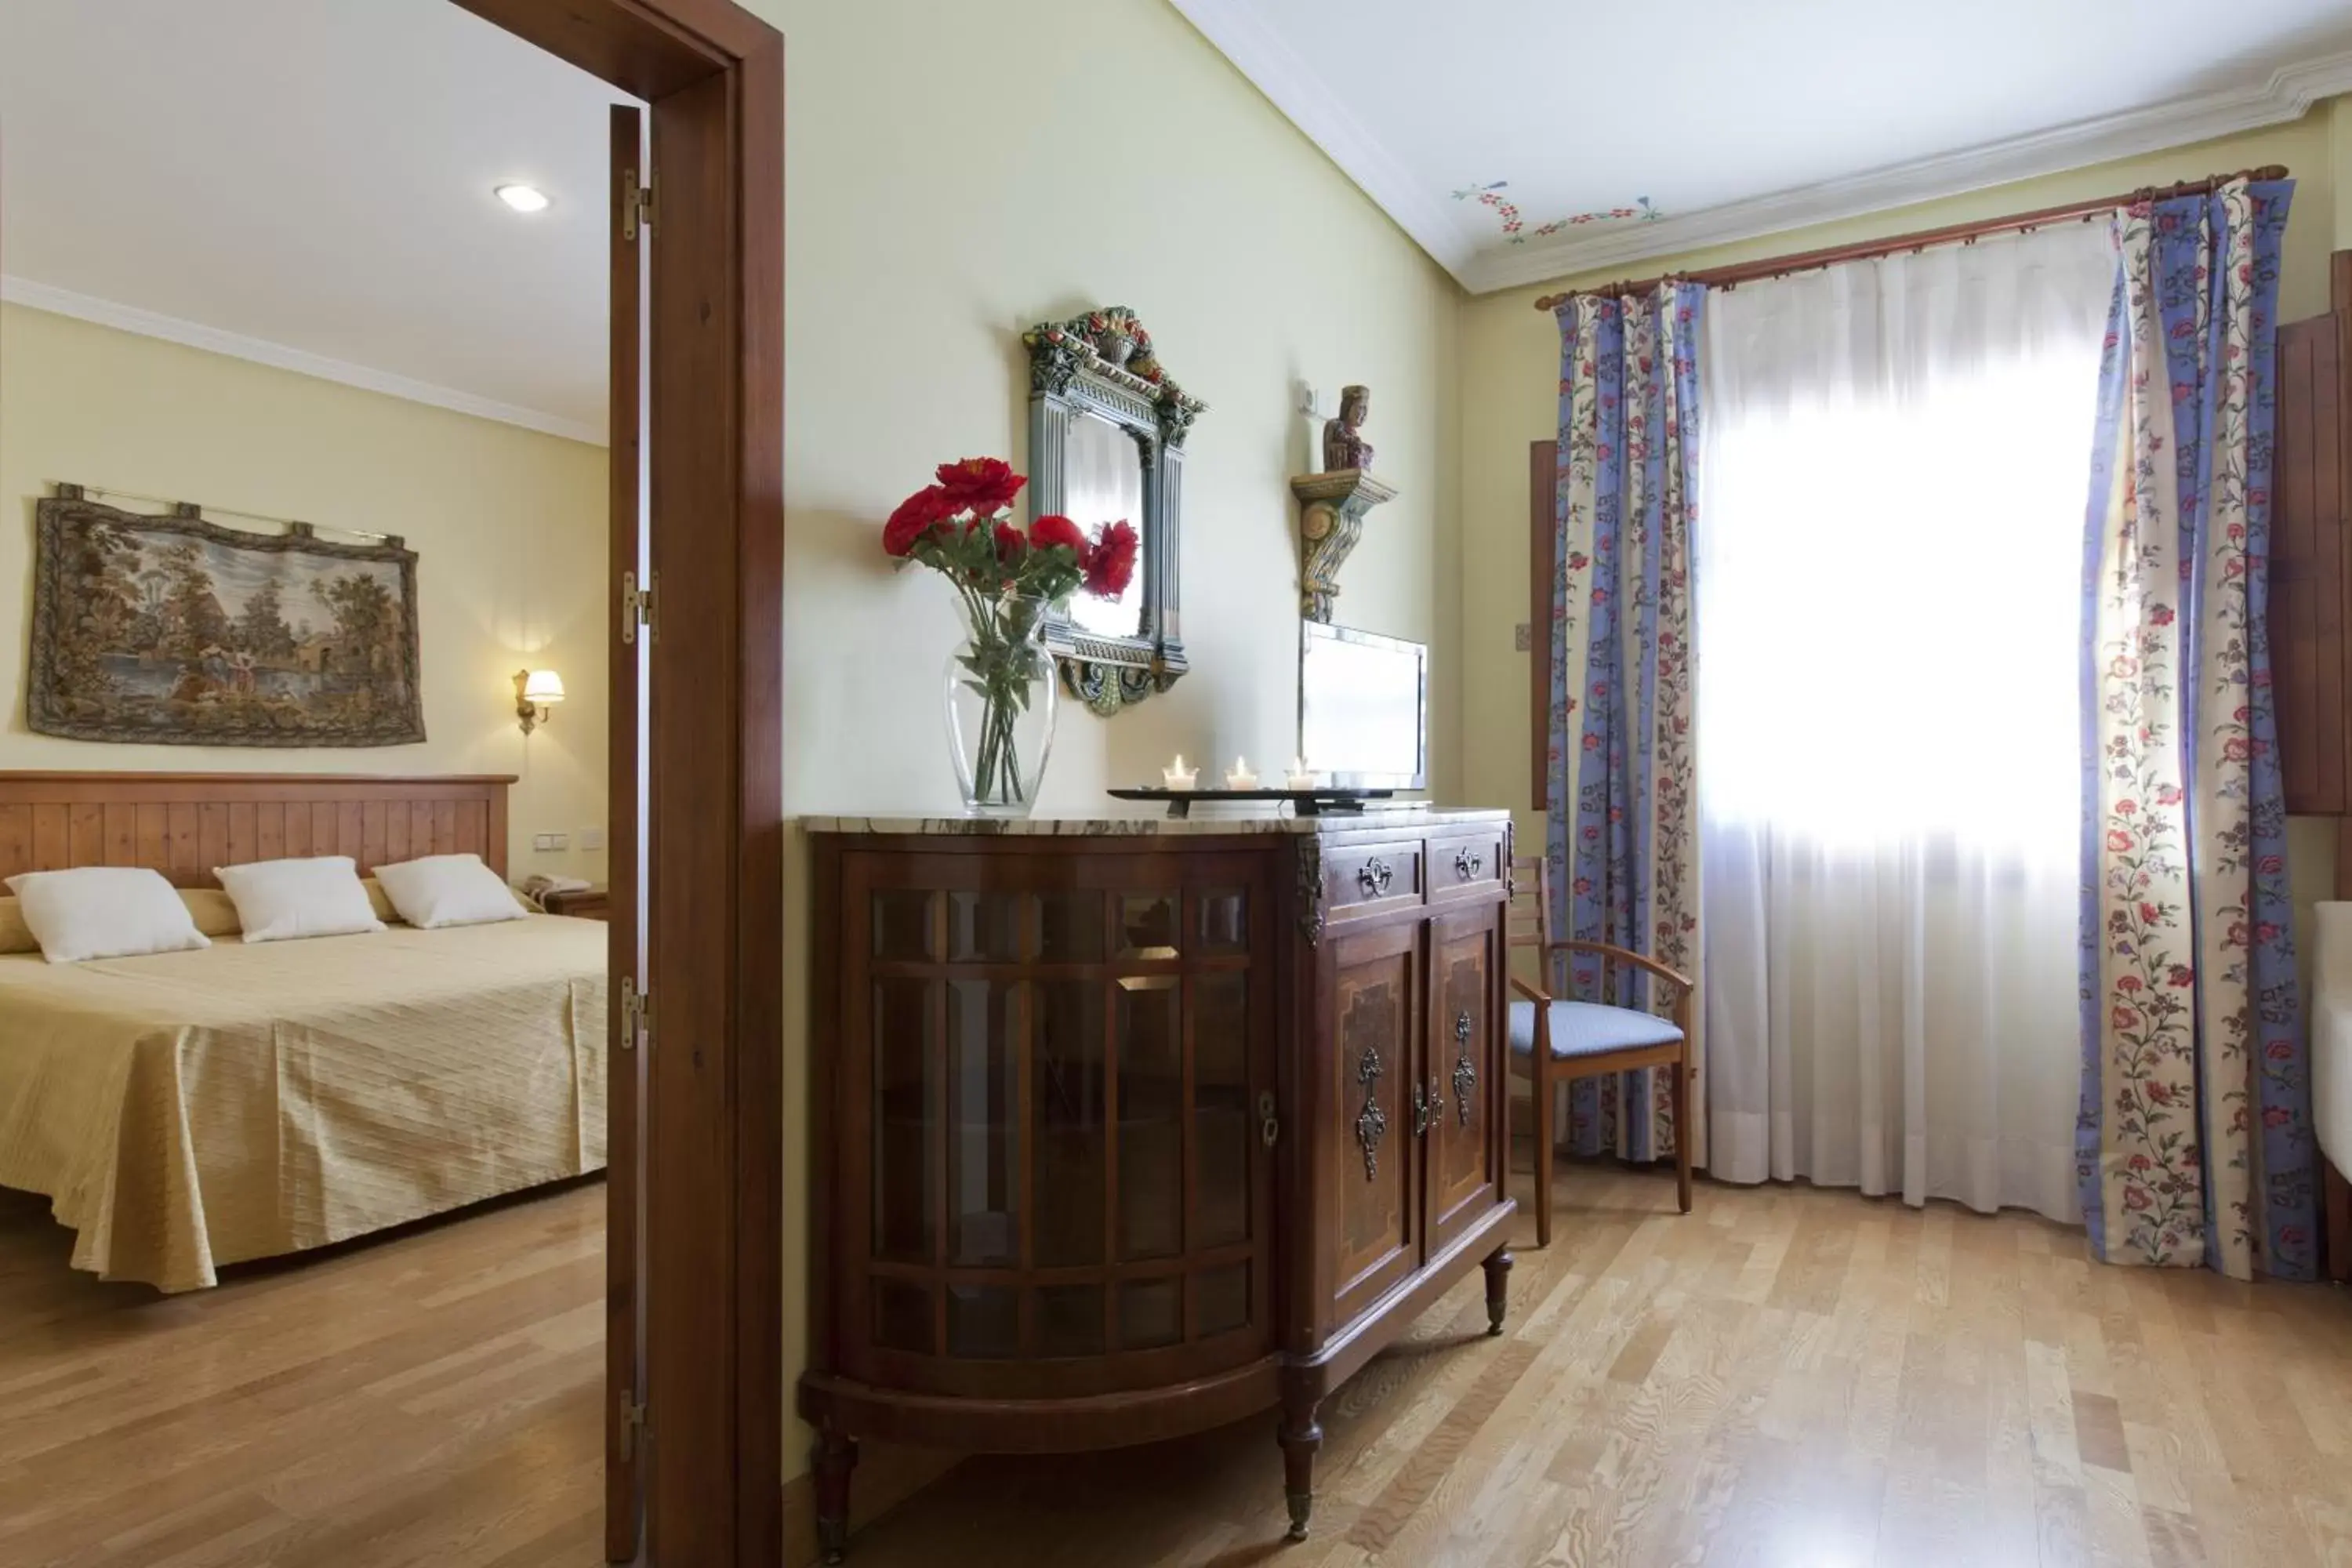 Photo of the whole room in Hotel Casona de la Reyna